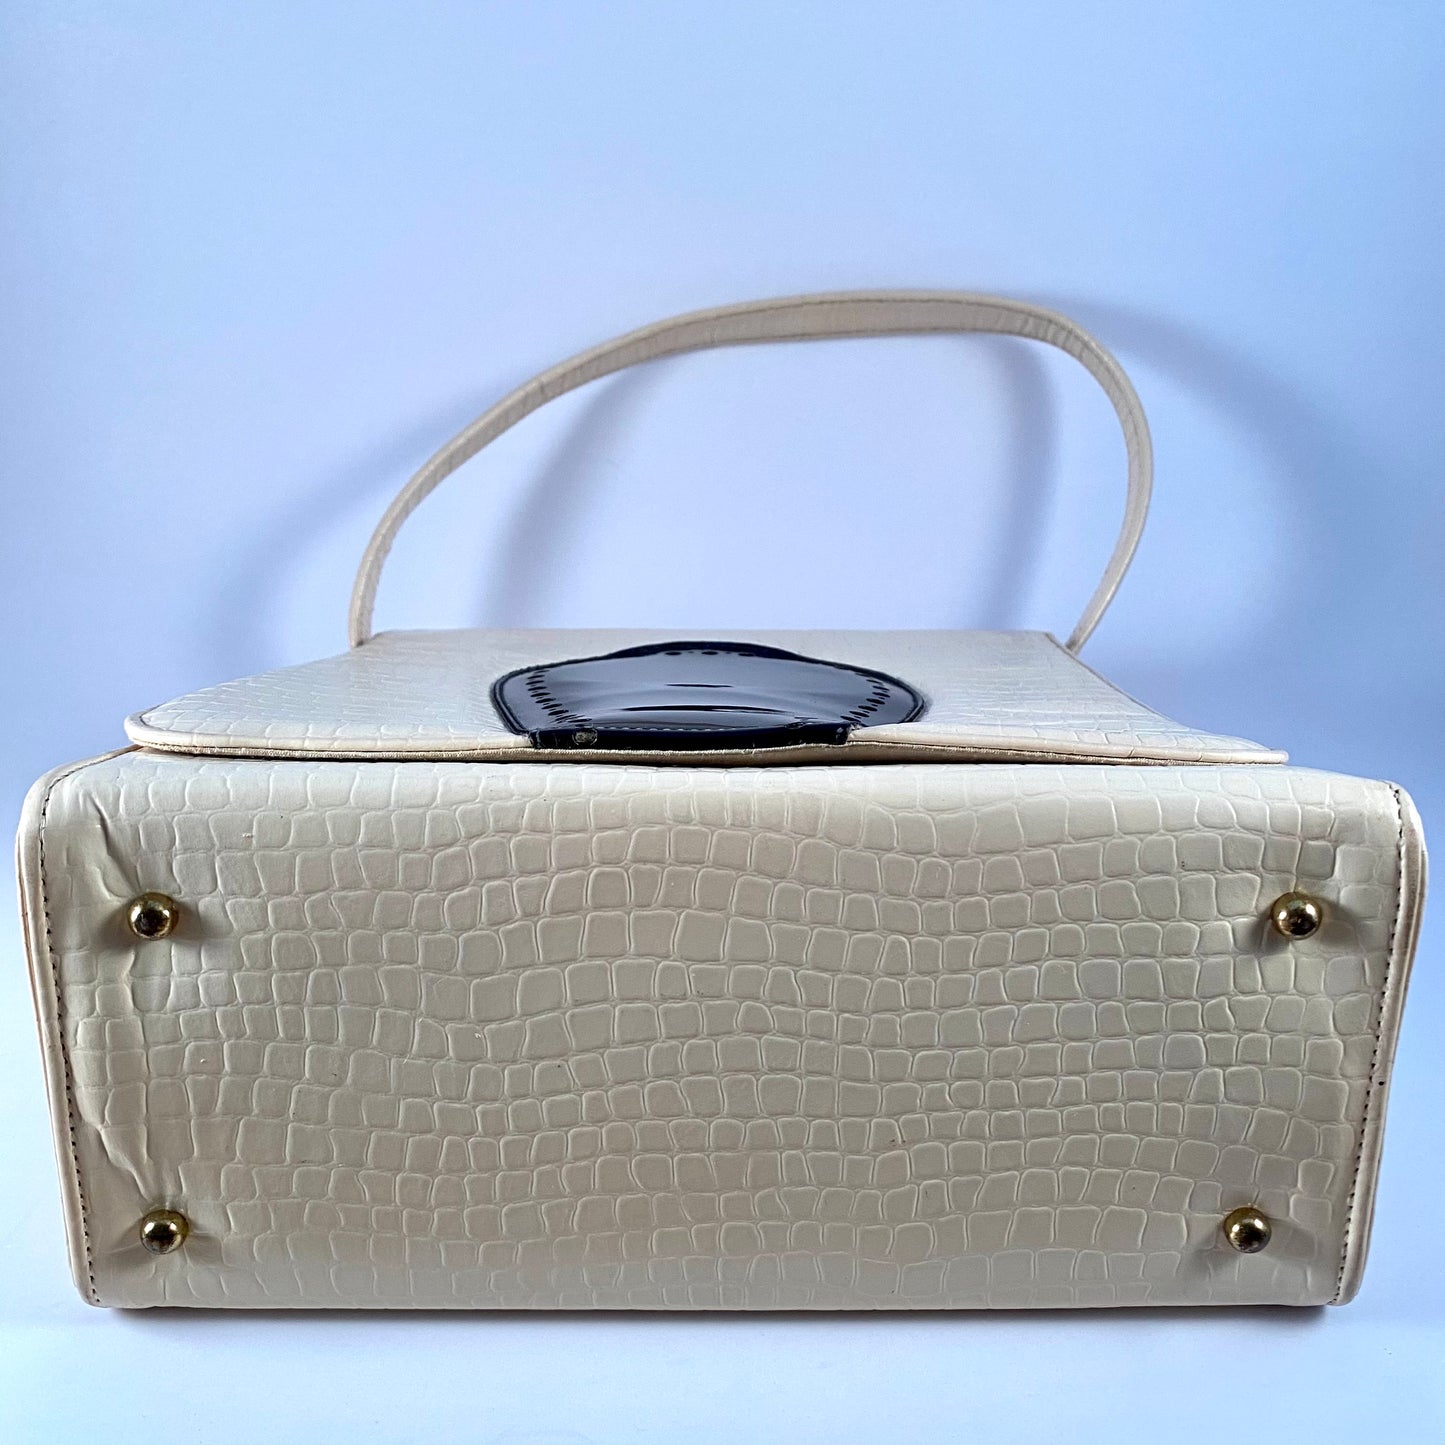 1950s Ivory & Black Patent Leather Front Flap Handbag